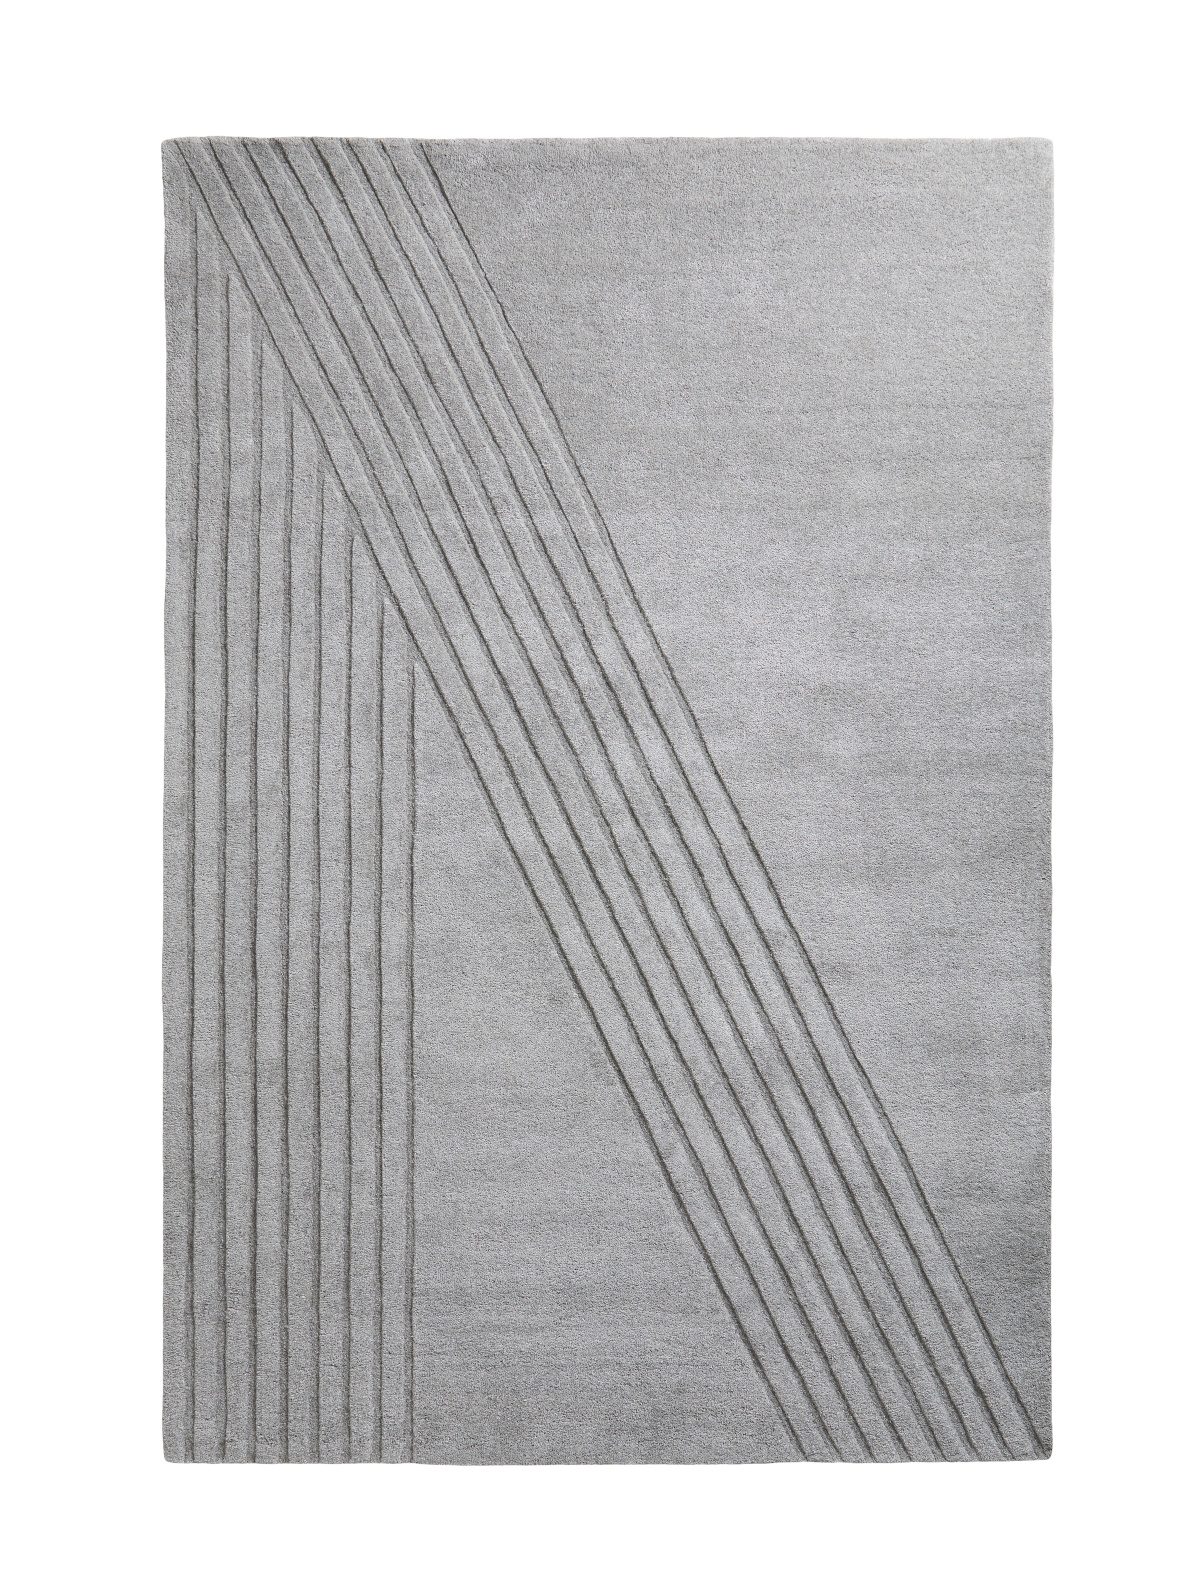 Kyoto Teppich, 90 x 140 cm, grey